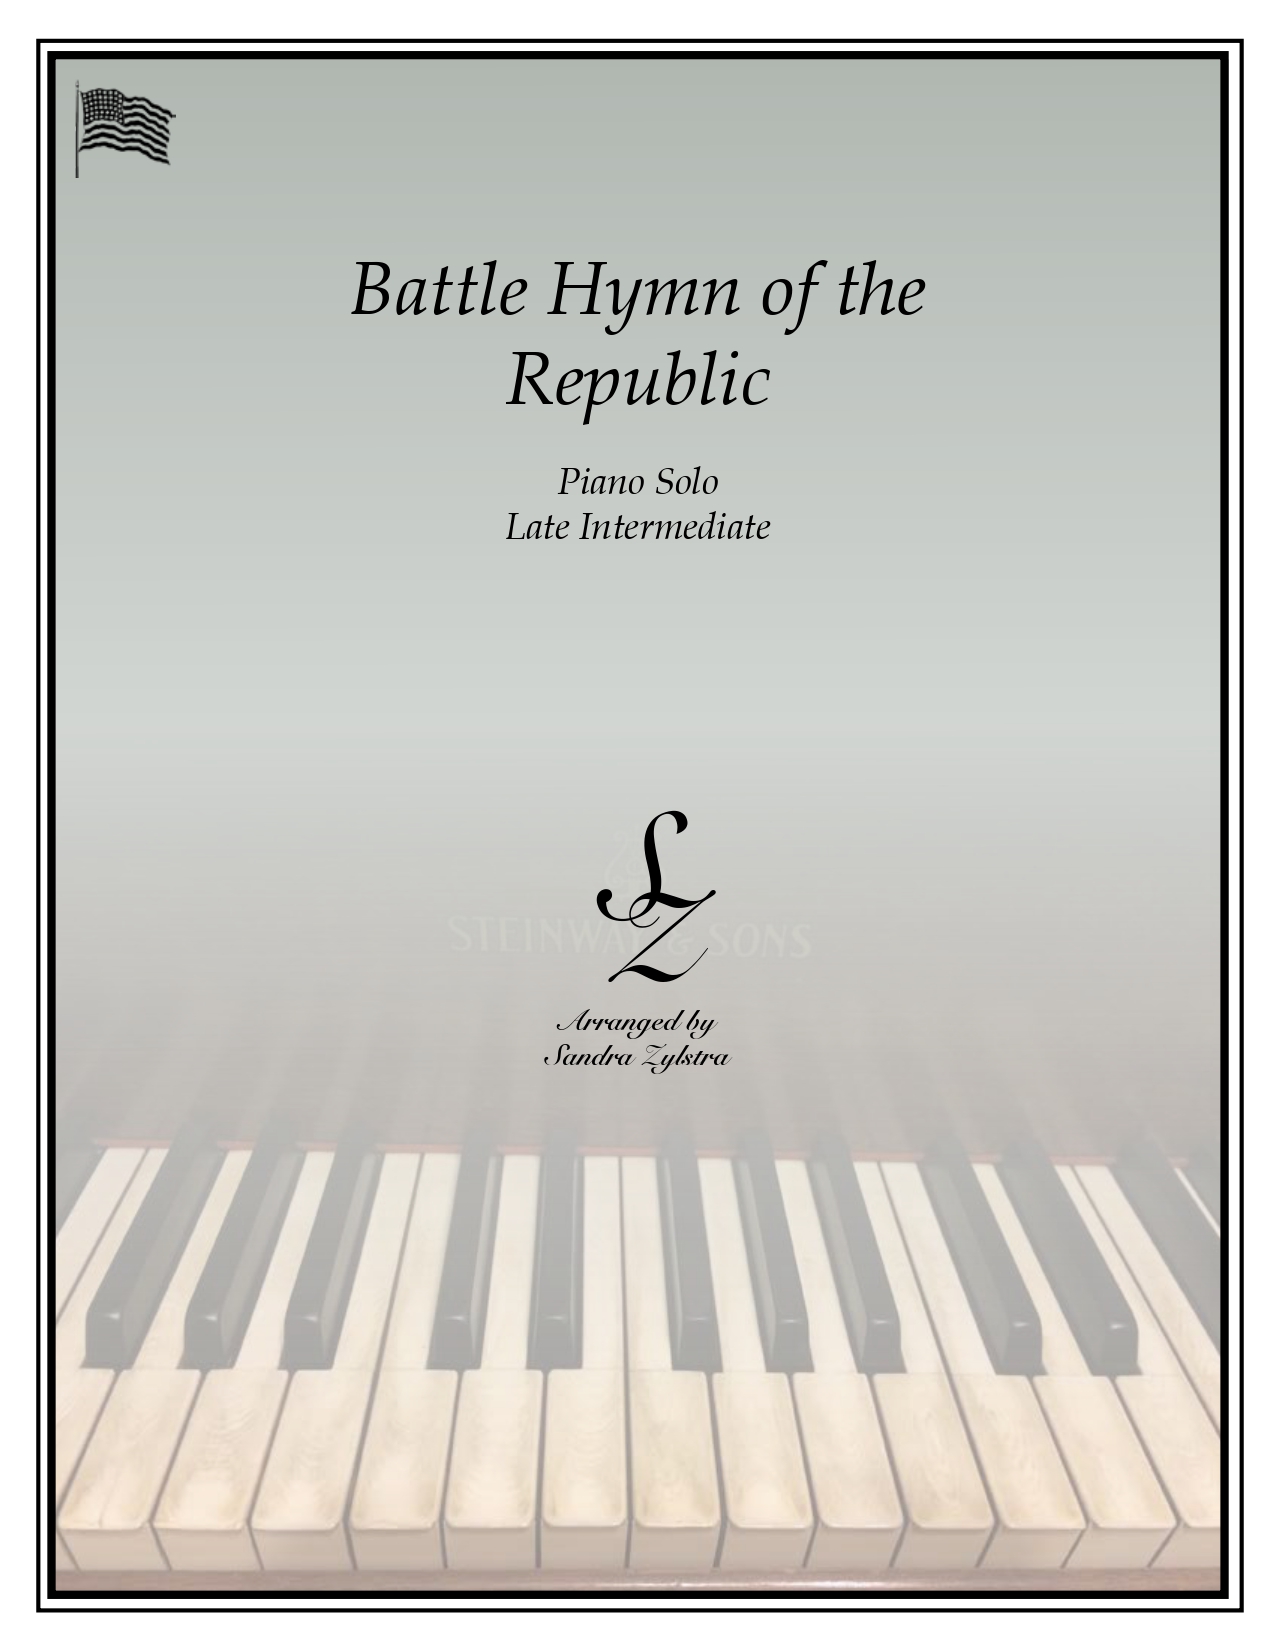 Battle Hymn Of The Republic late intermediate piano cover page 00011